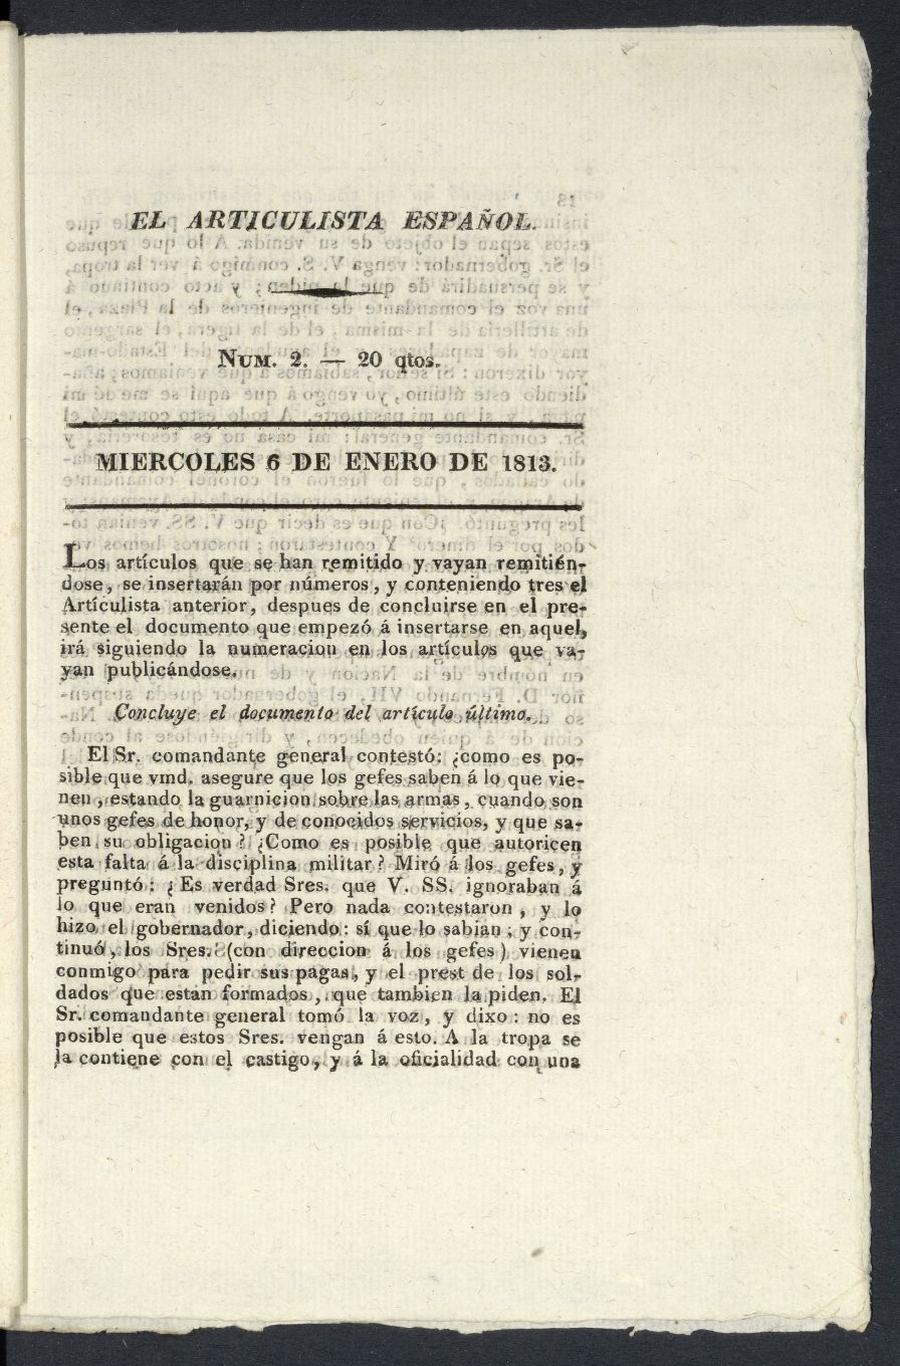 El Articulista Espaol, mircoles 6 de enero de 1813